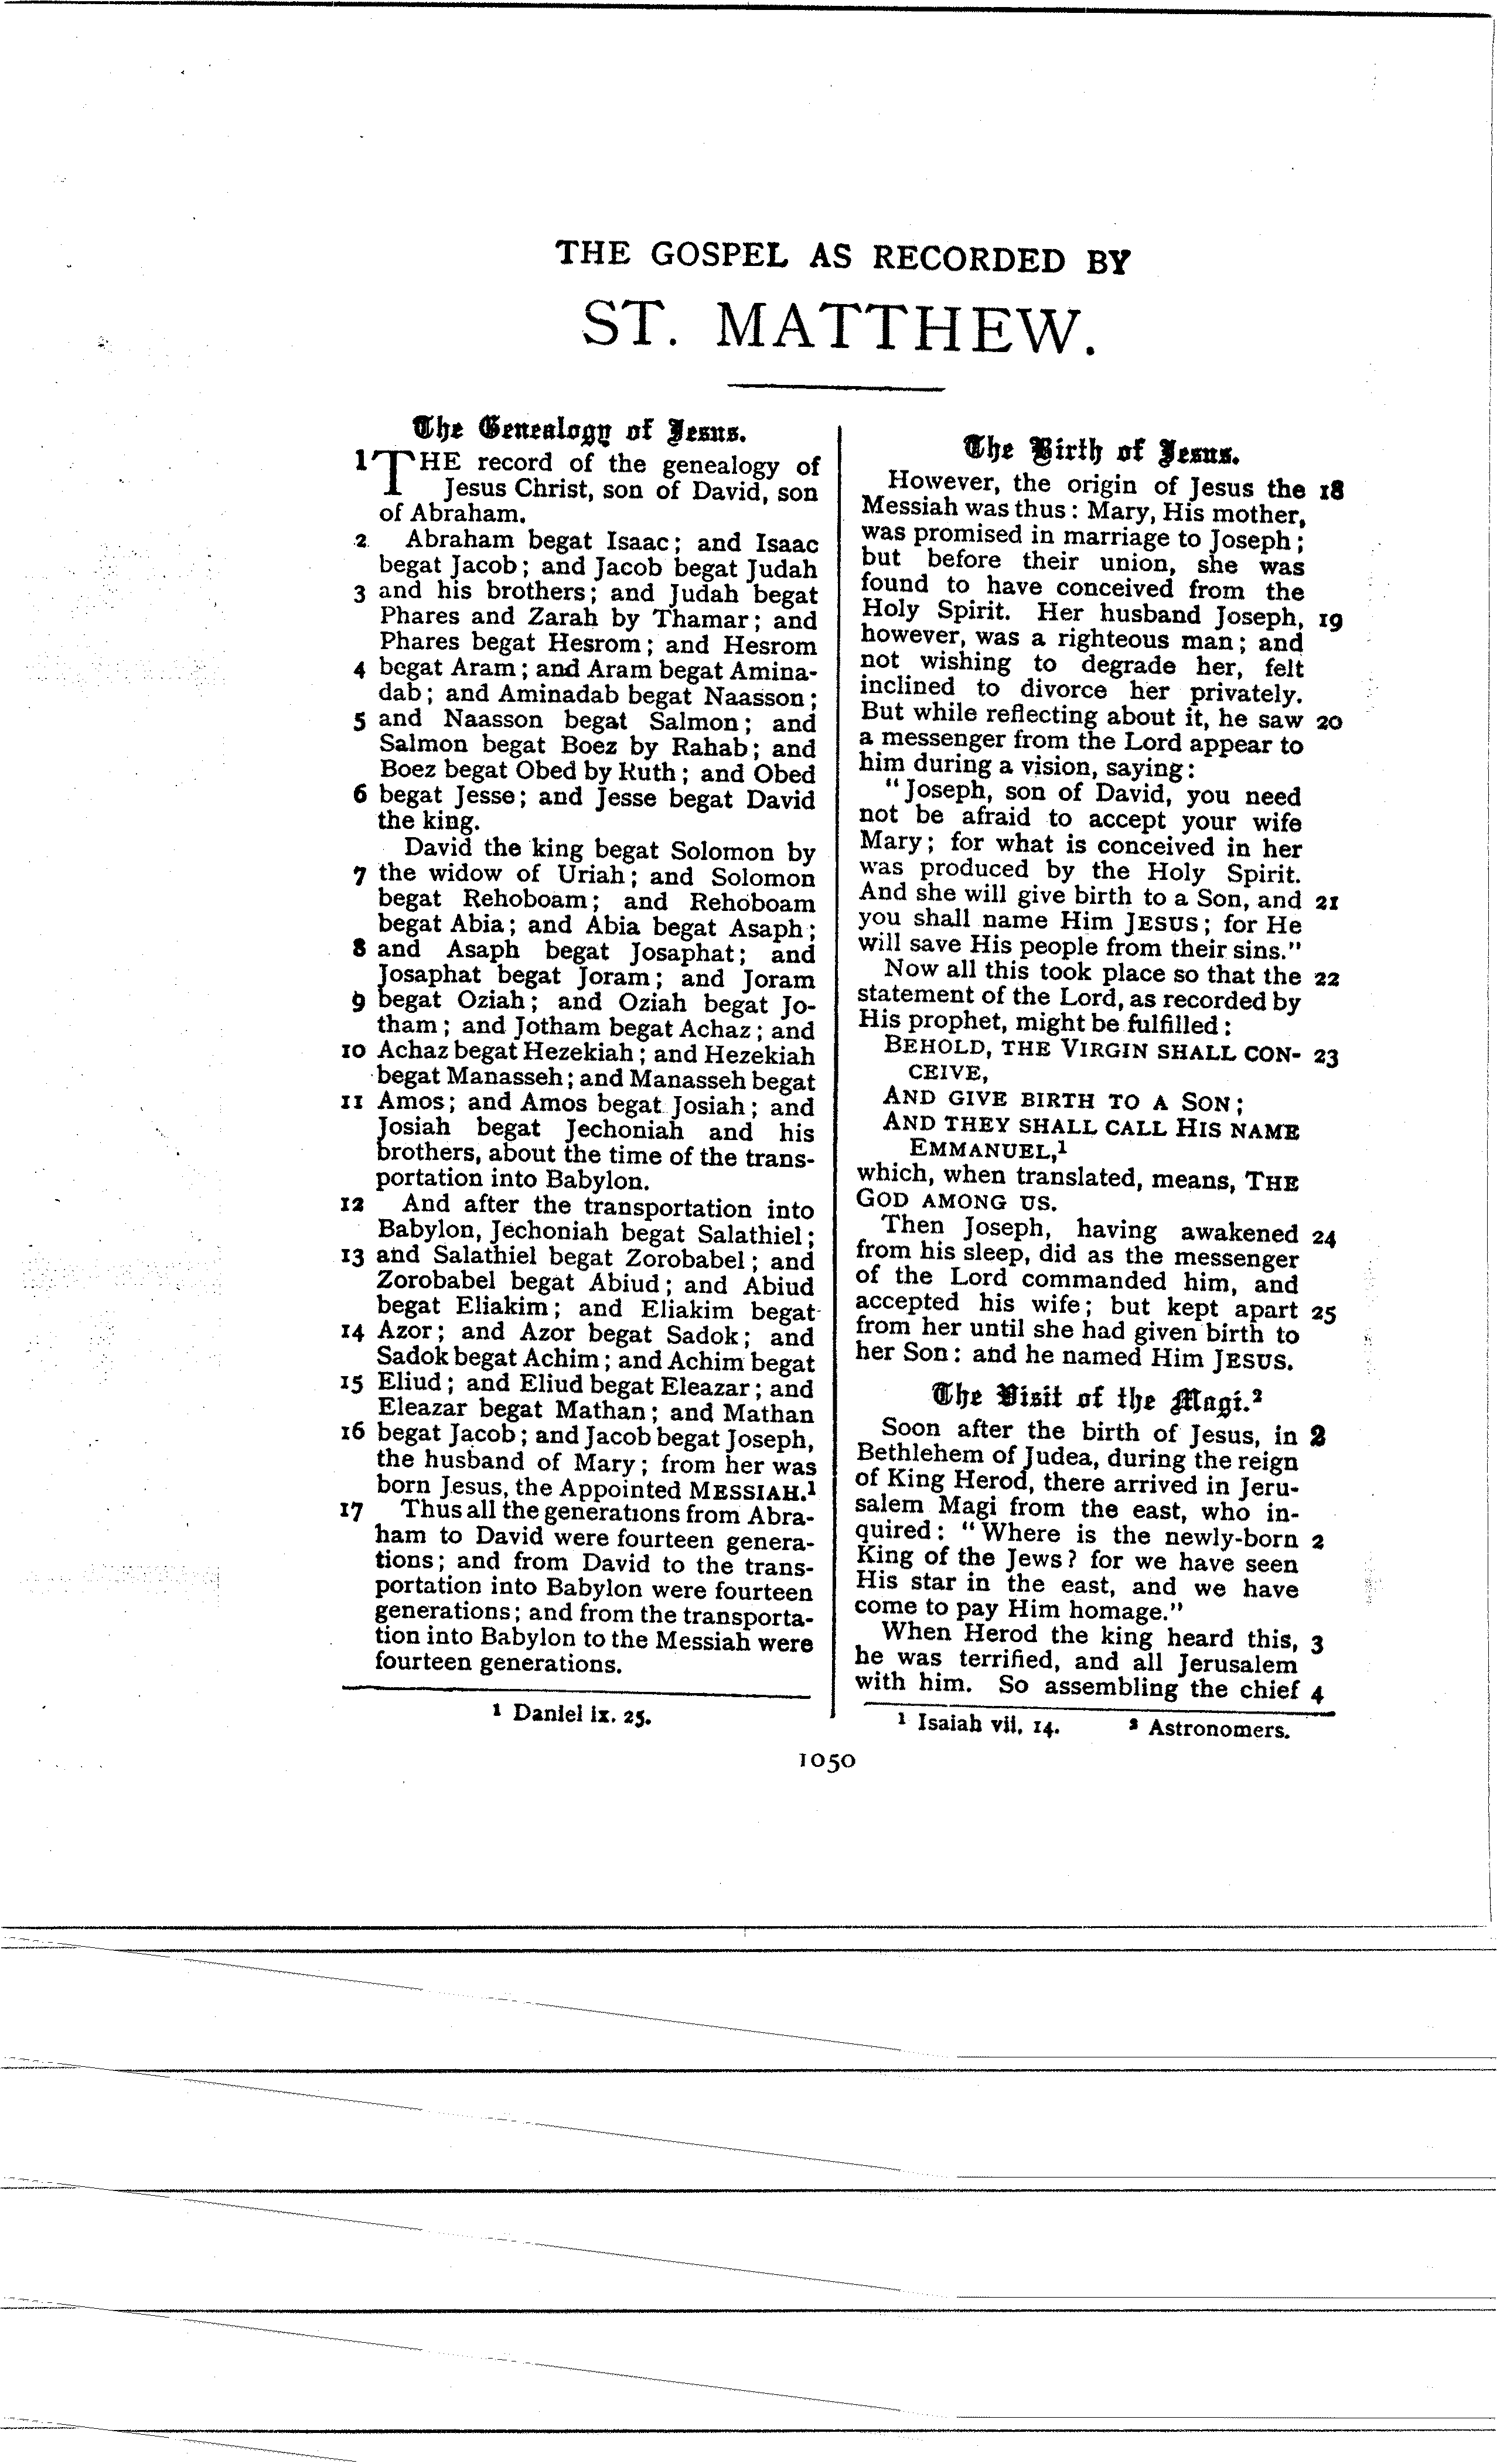 Ferrar Fenton Bible page 1050